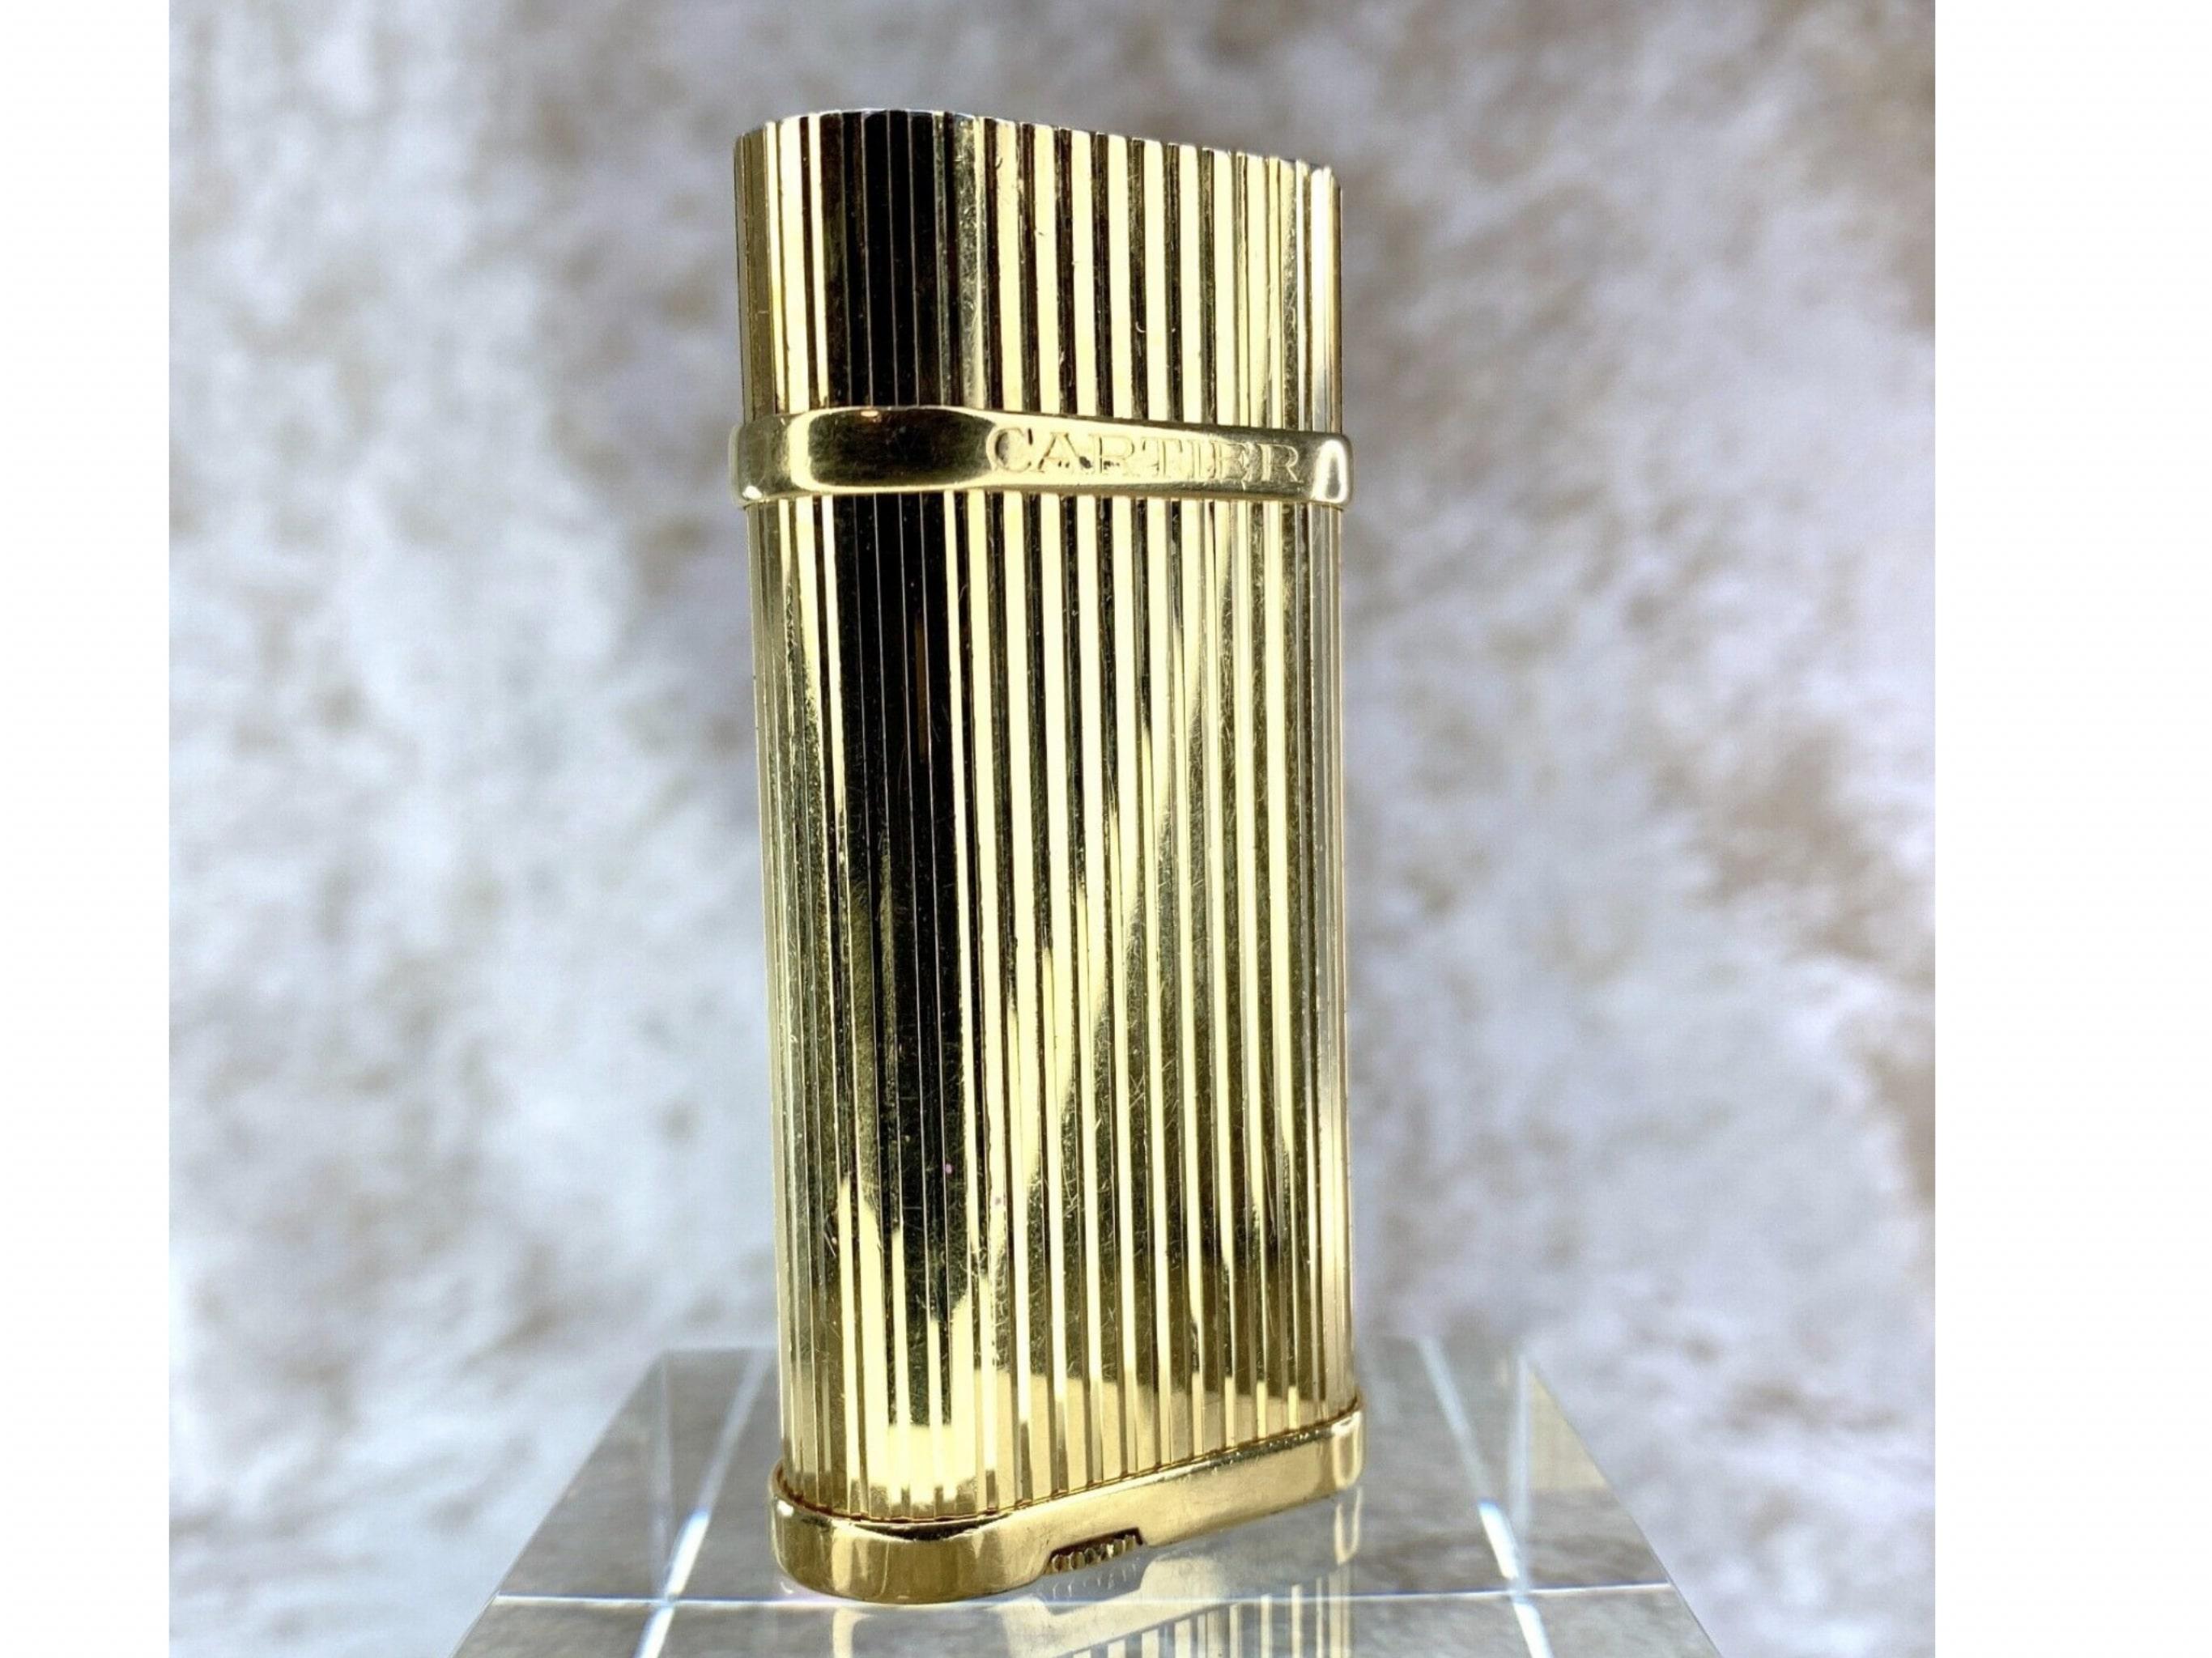 Cartier Lighter in 18k Gold Plate Godron Model
Circa 2000
Retro 
Vintage 
Rare 
Gold color 
Cartier sparks, ignites and flames 